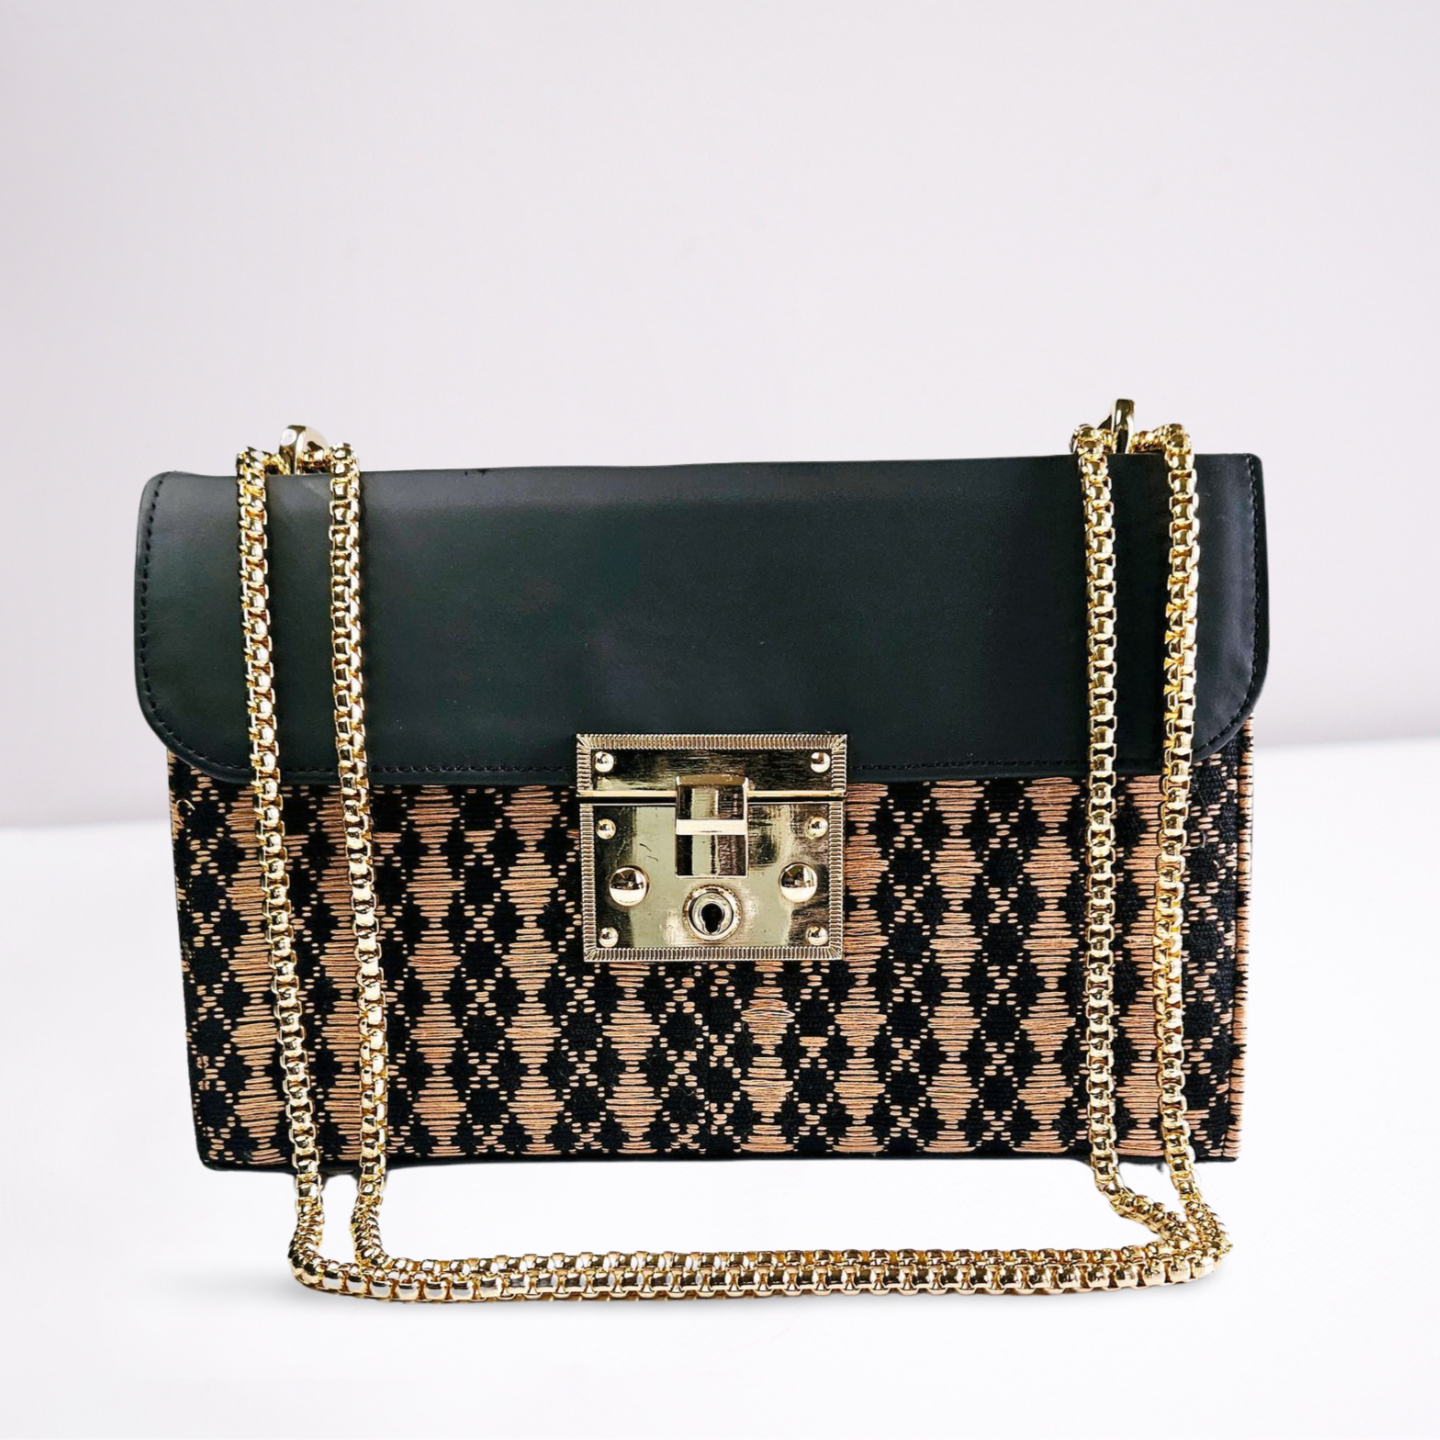 Zuri Leather Handbag - Brown/Black